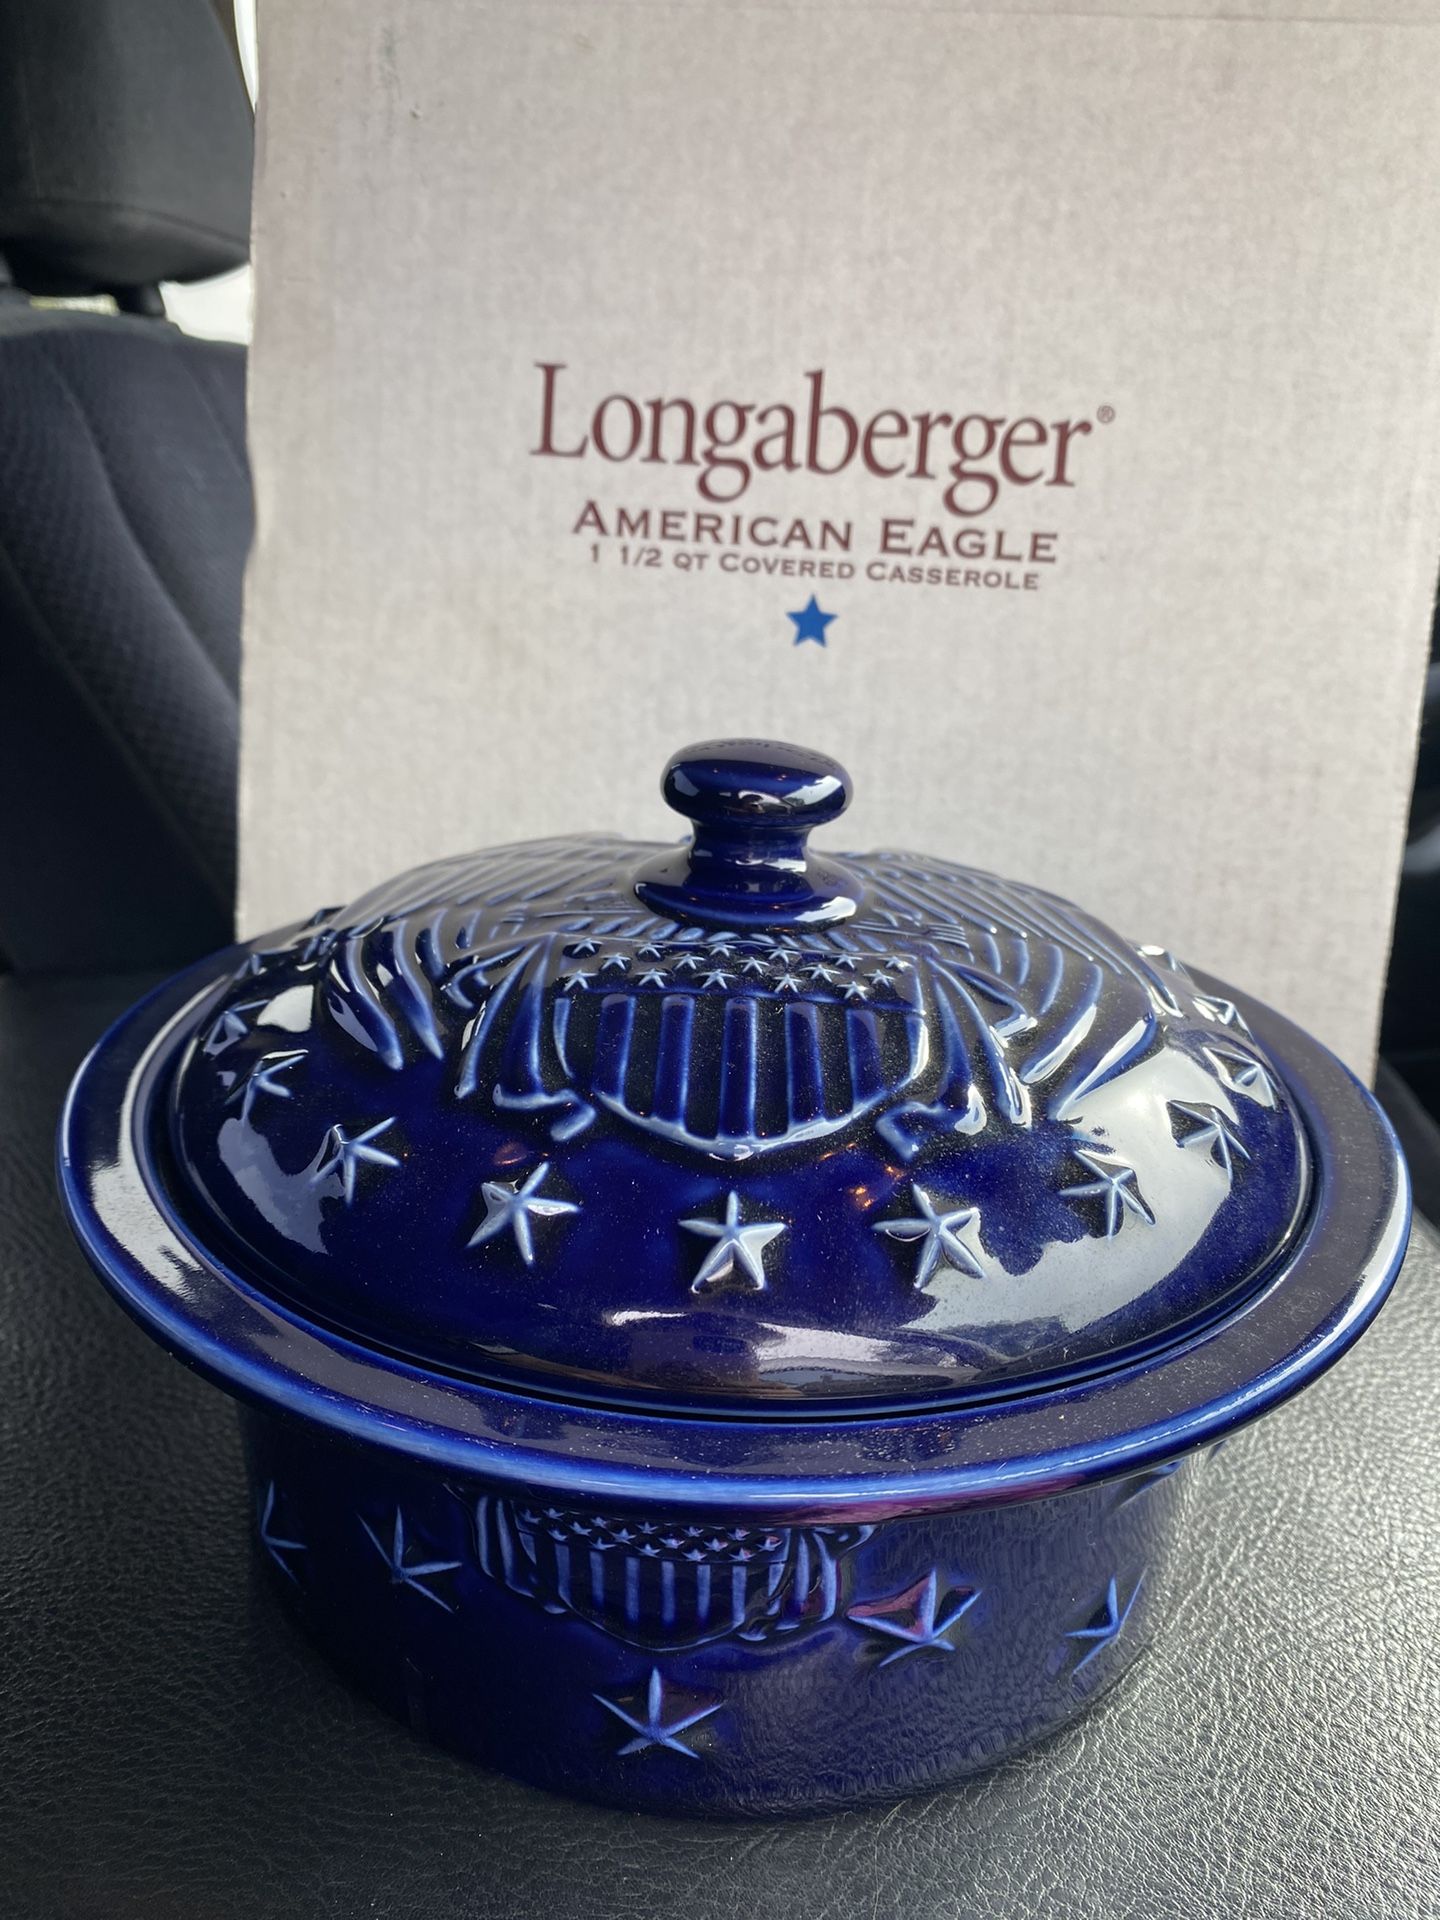 Longaberger Vintage Casserole, 2 Piece, and box. Stunning.